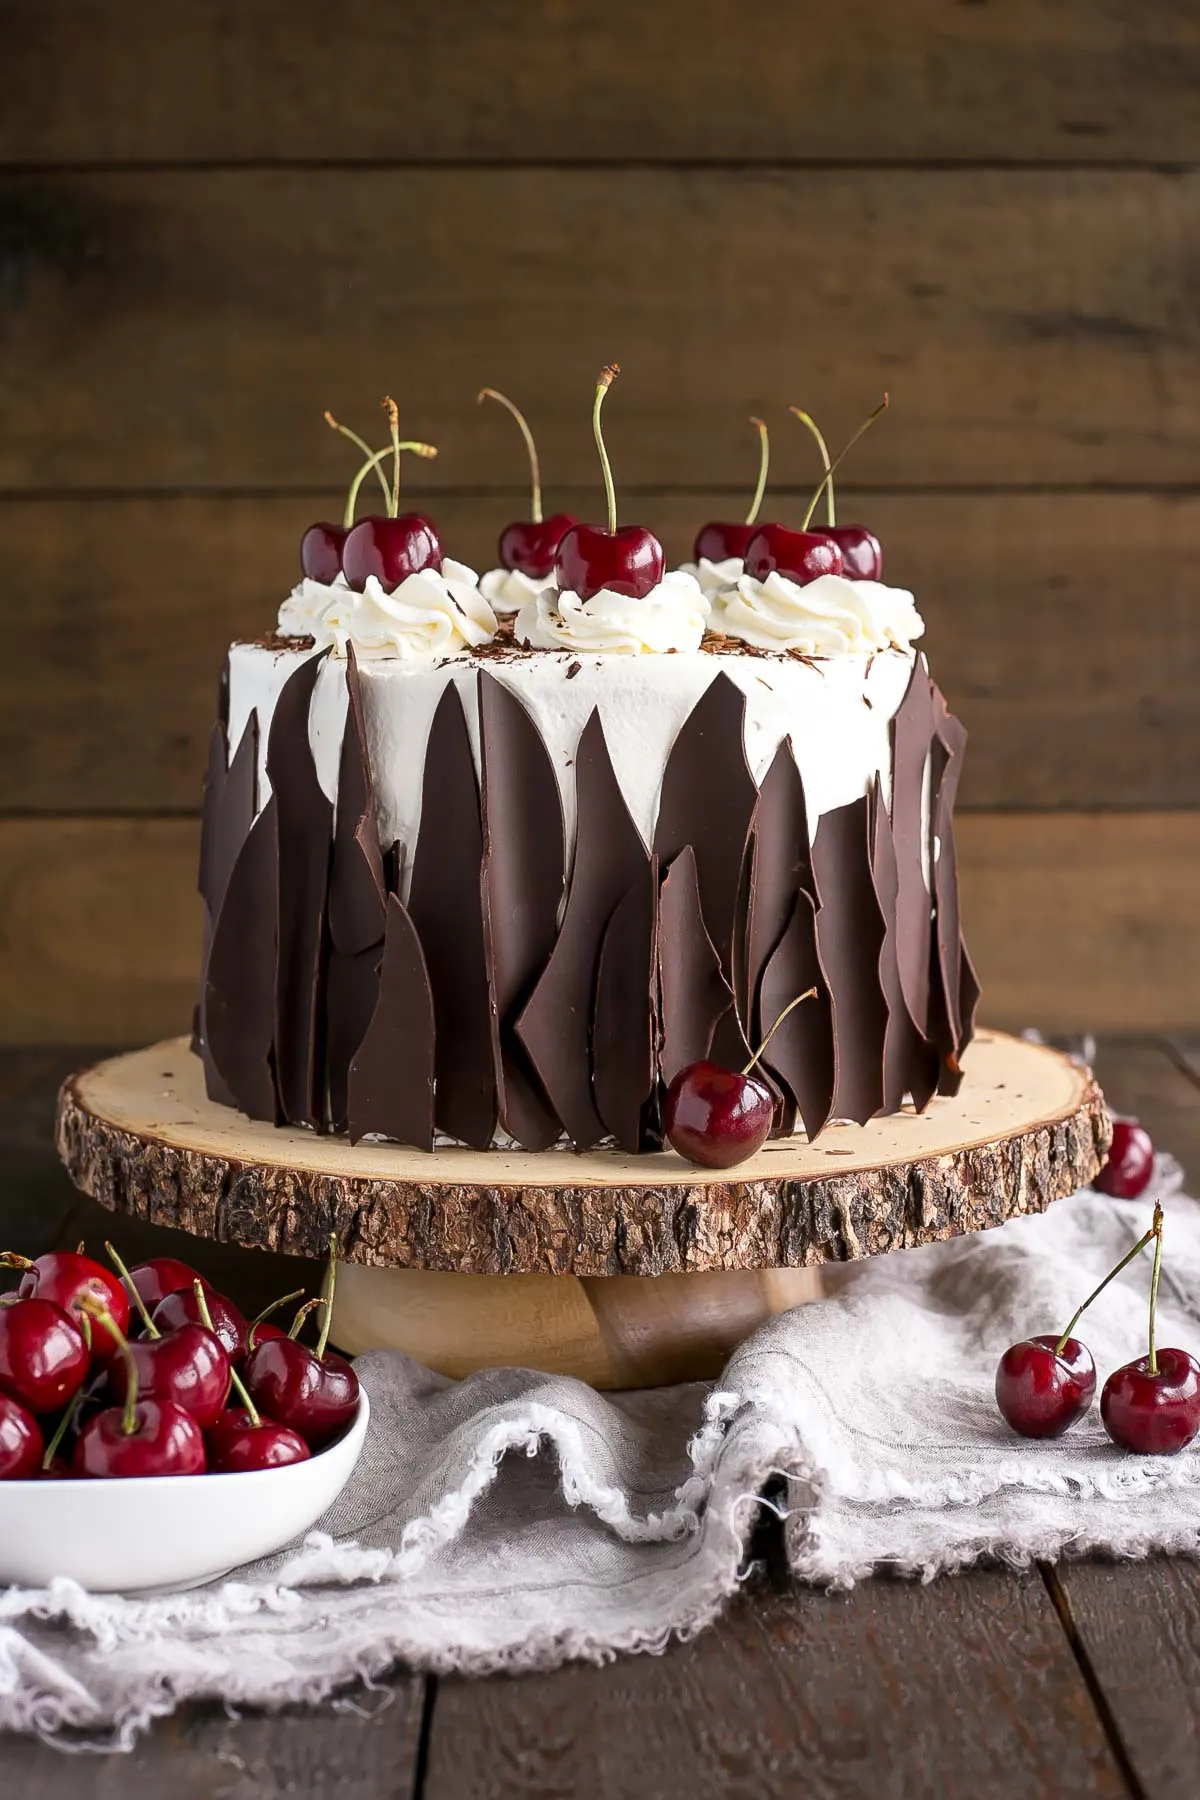 Best cake types for birthday 